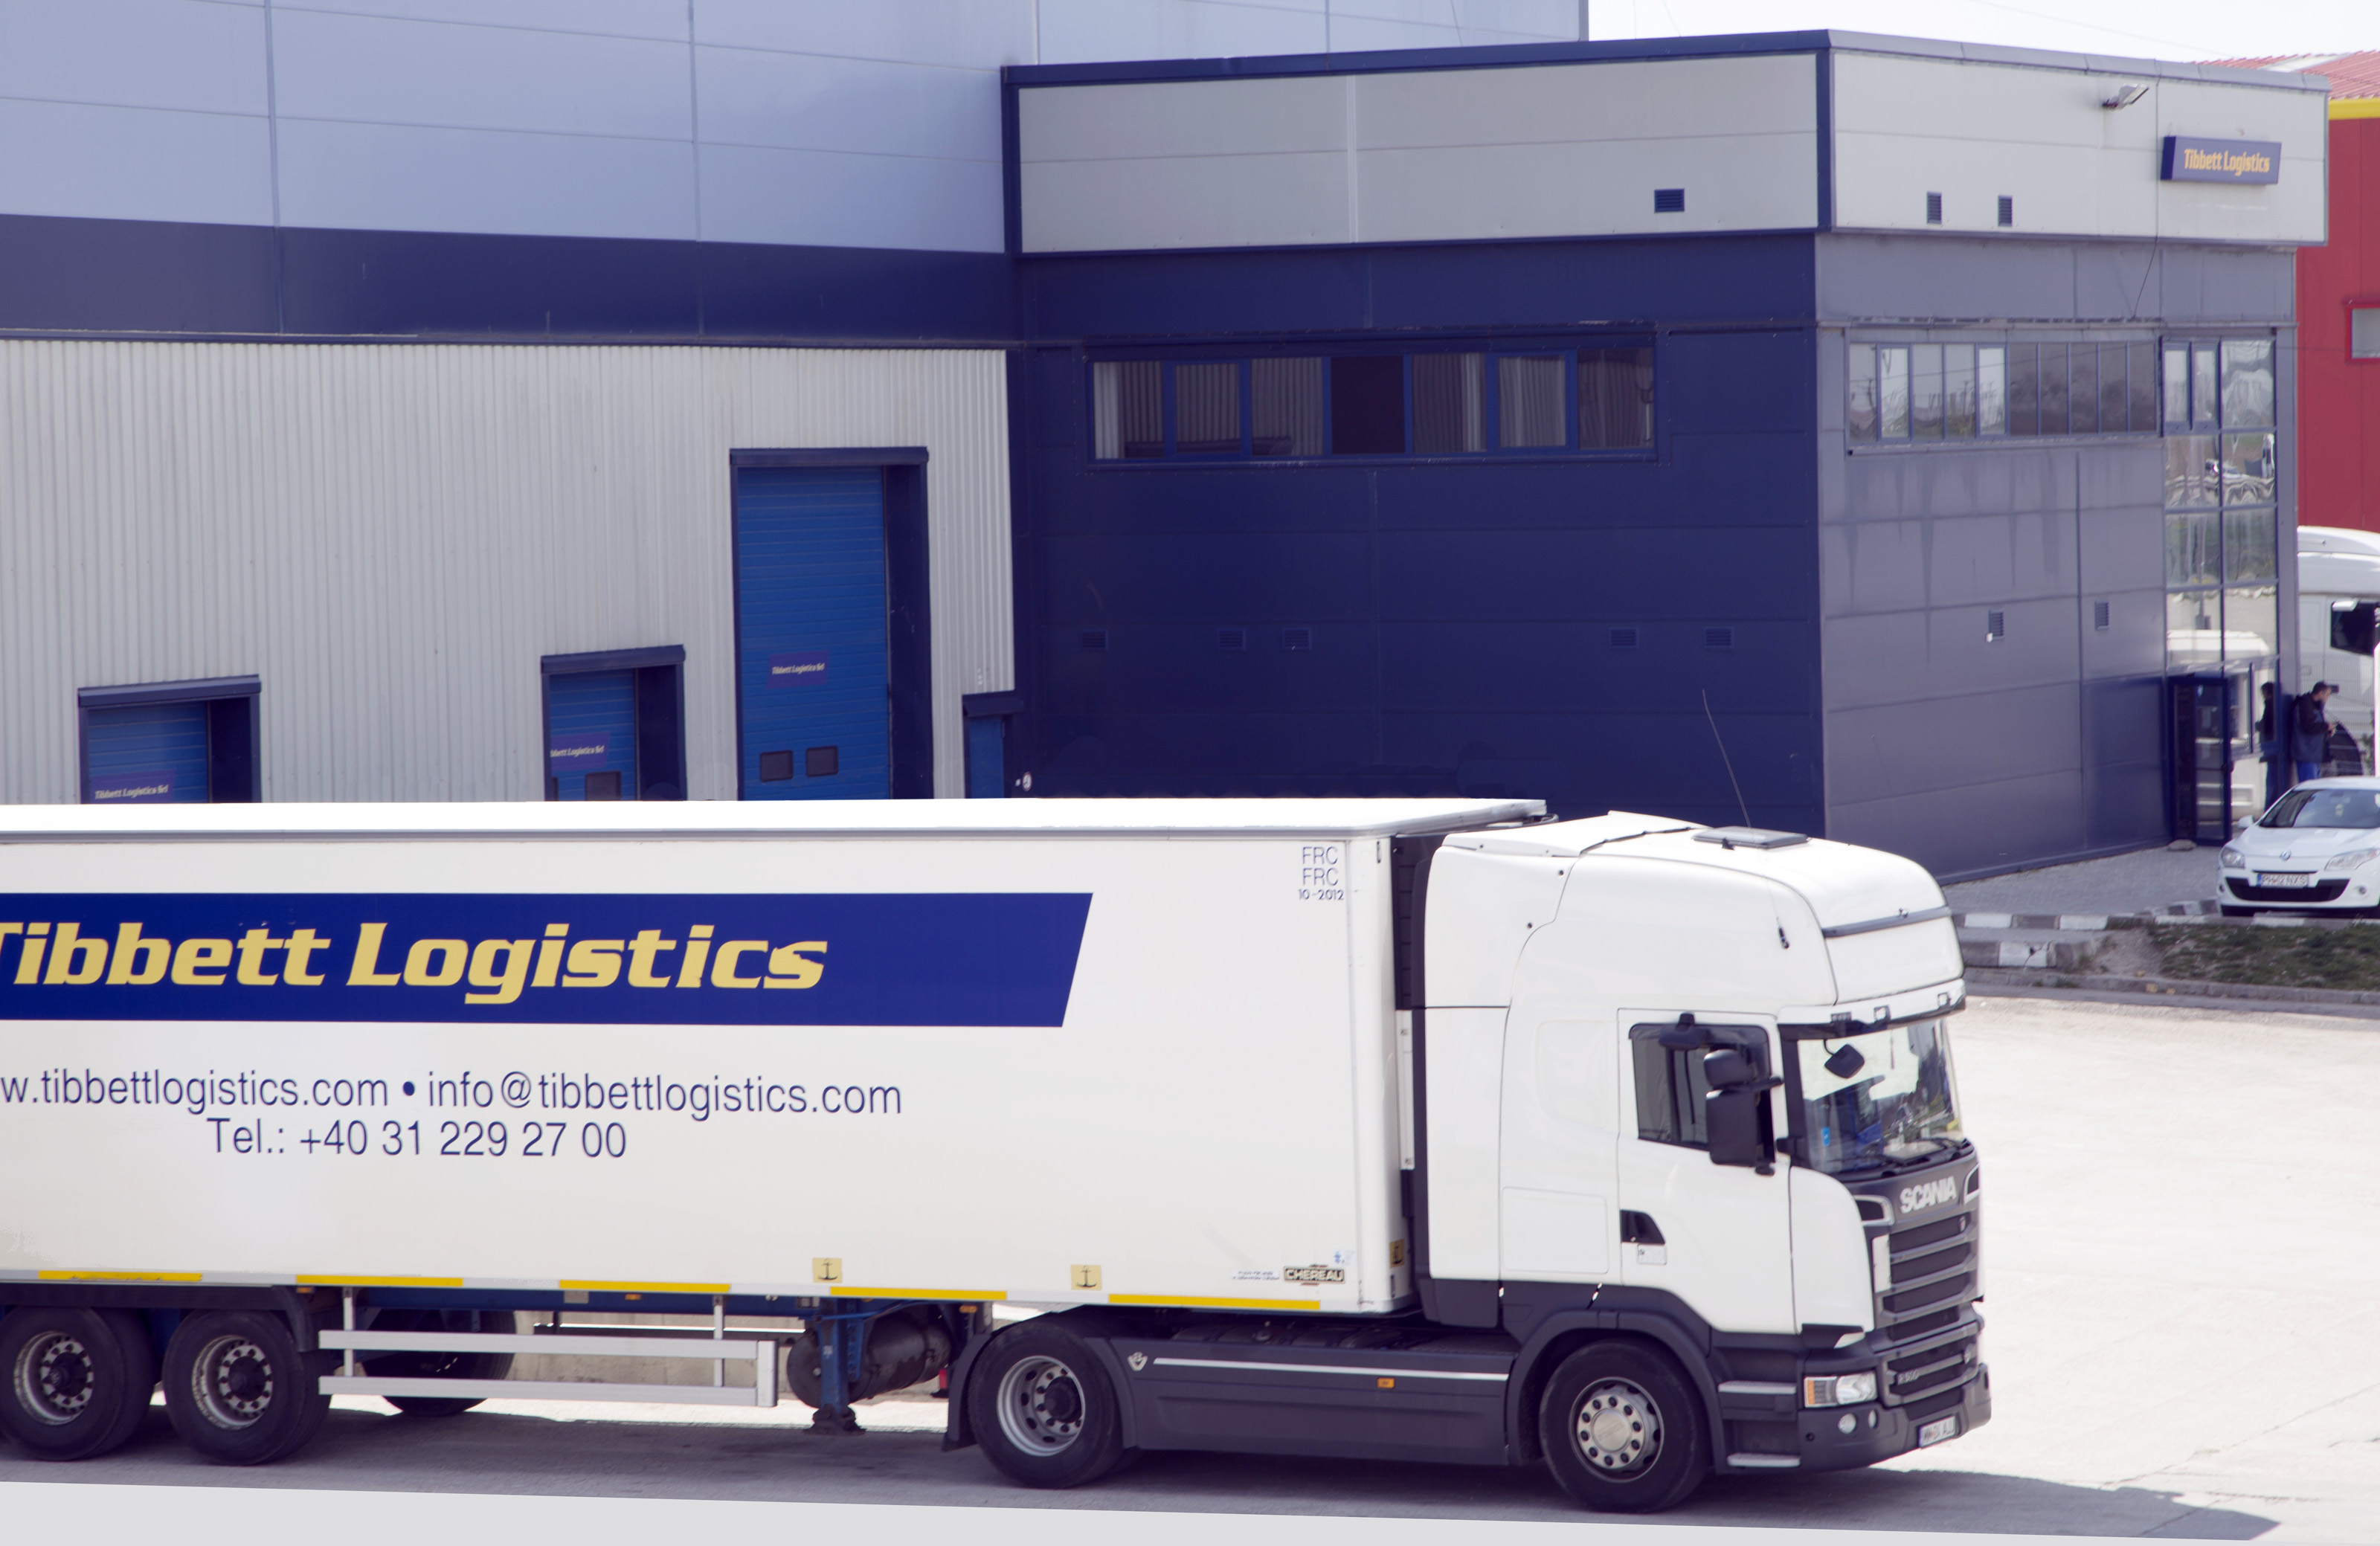 Yusen Logistics (Europe) BV übernimmt Tibbett Logistics